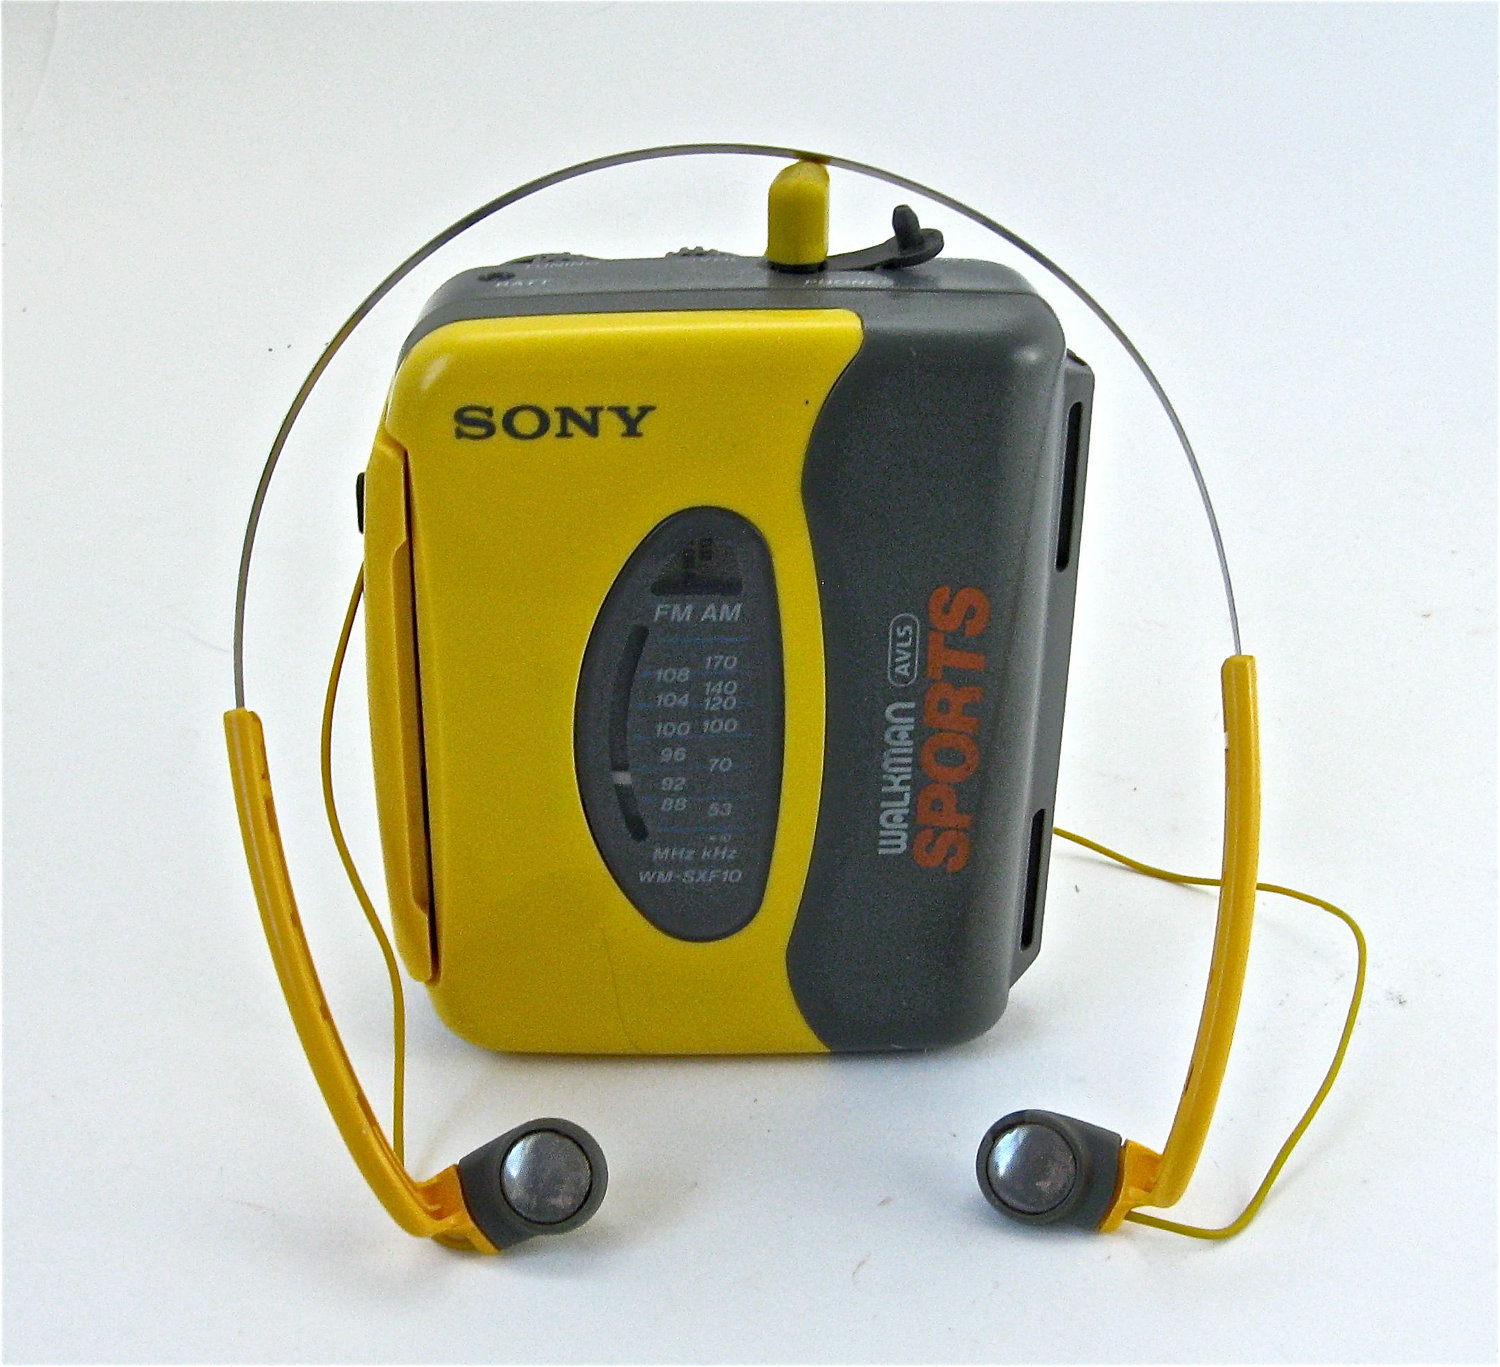 The-Yellow-Walkman-Circa-1994.jpg